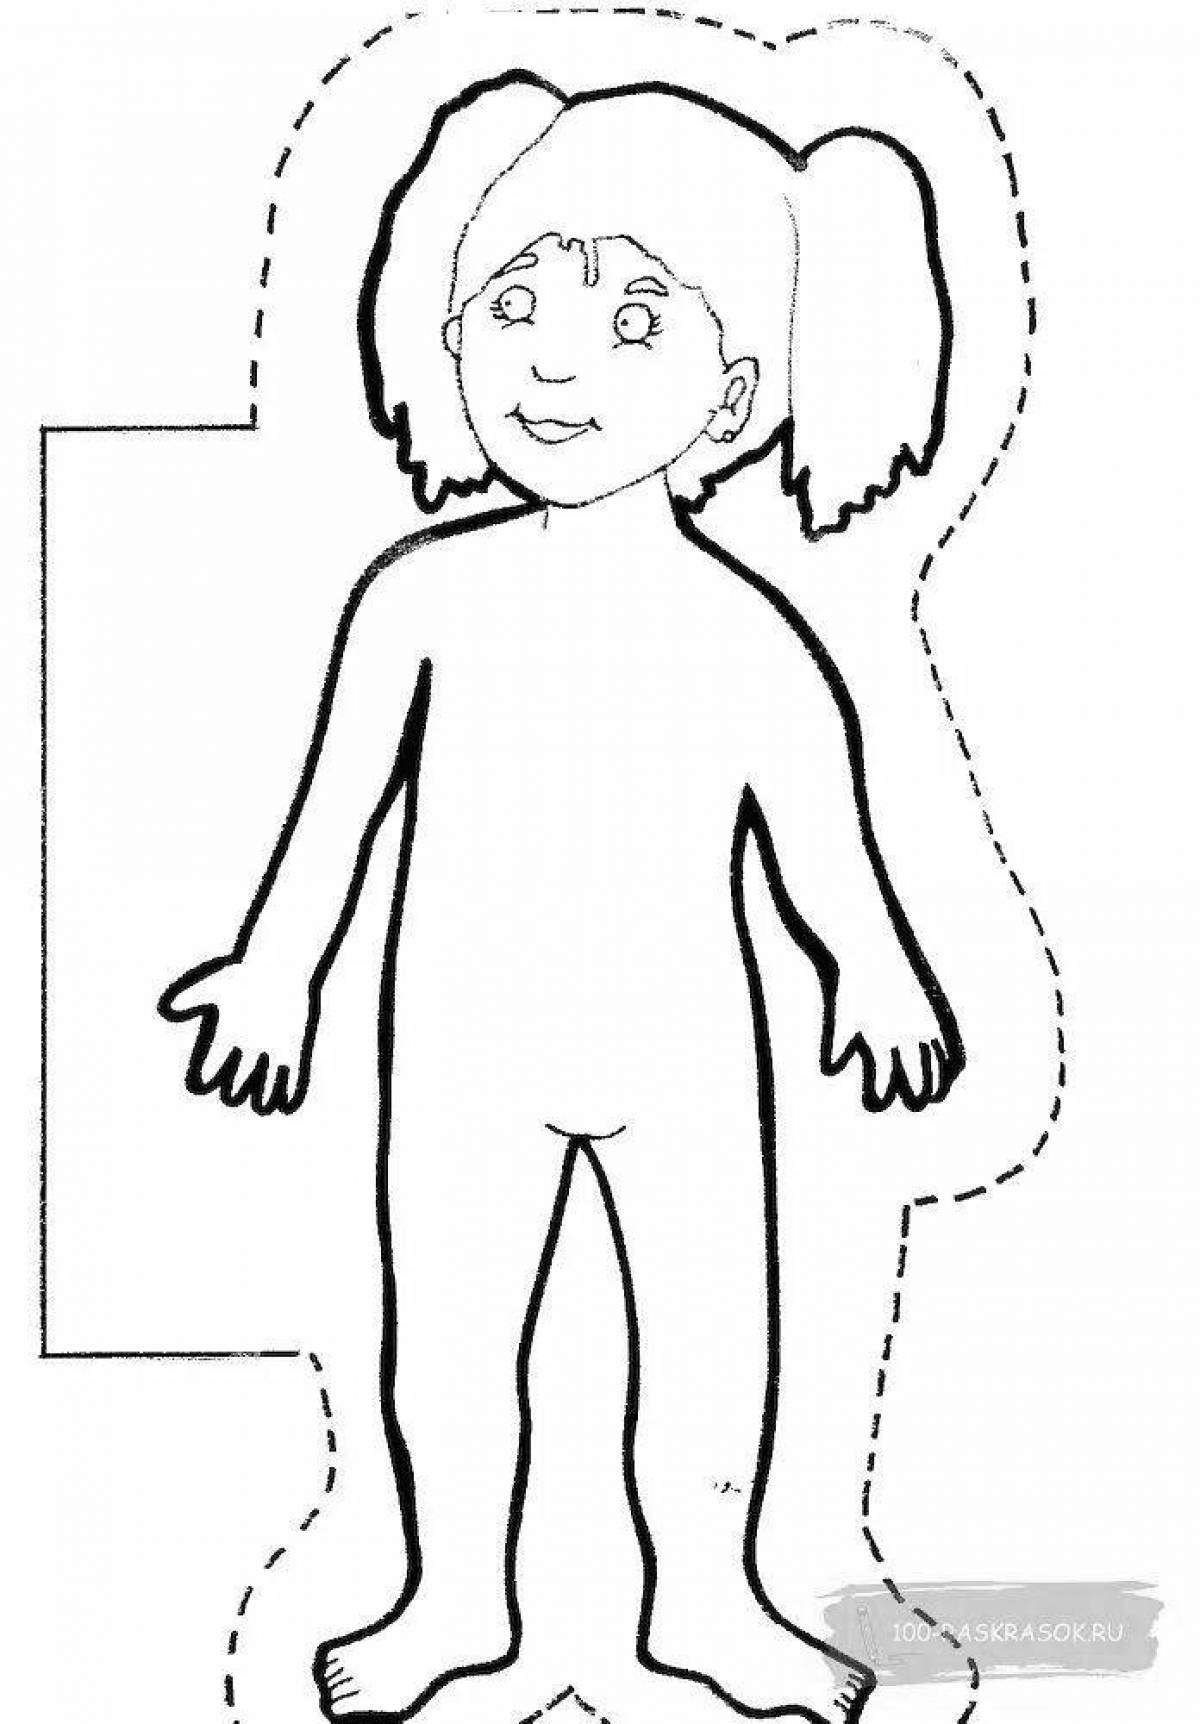 Fun coloring of human body part for preschoolers